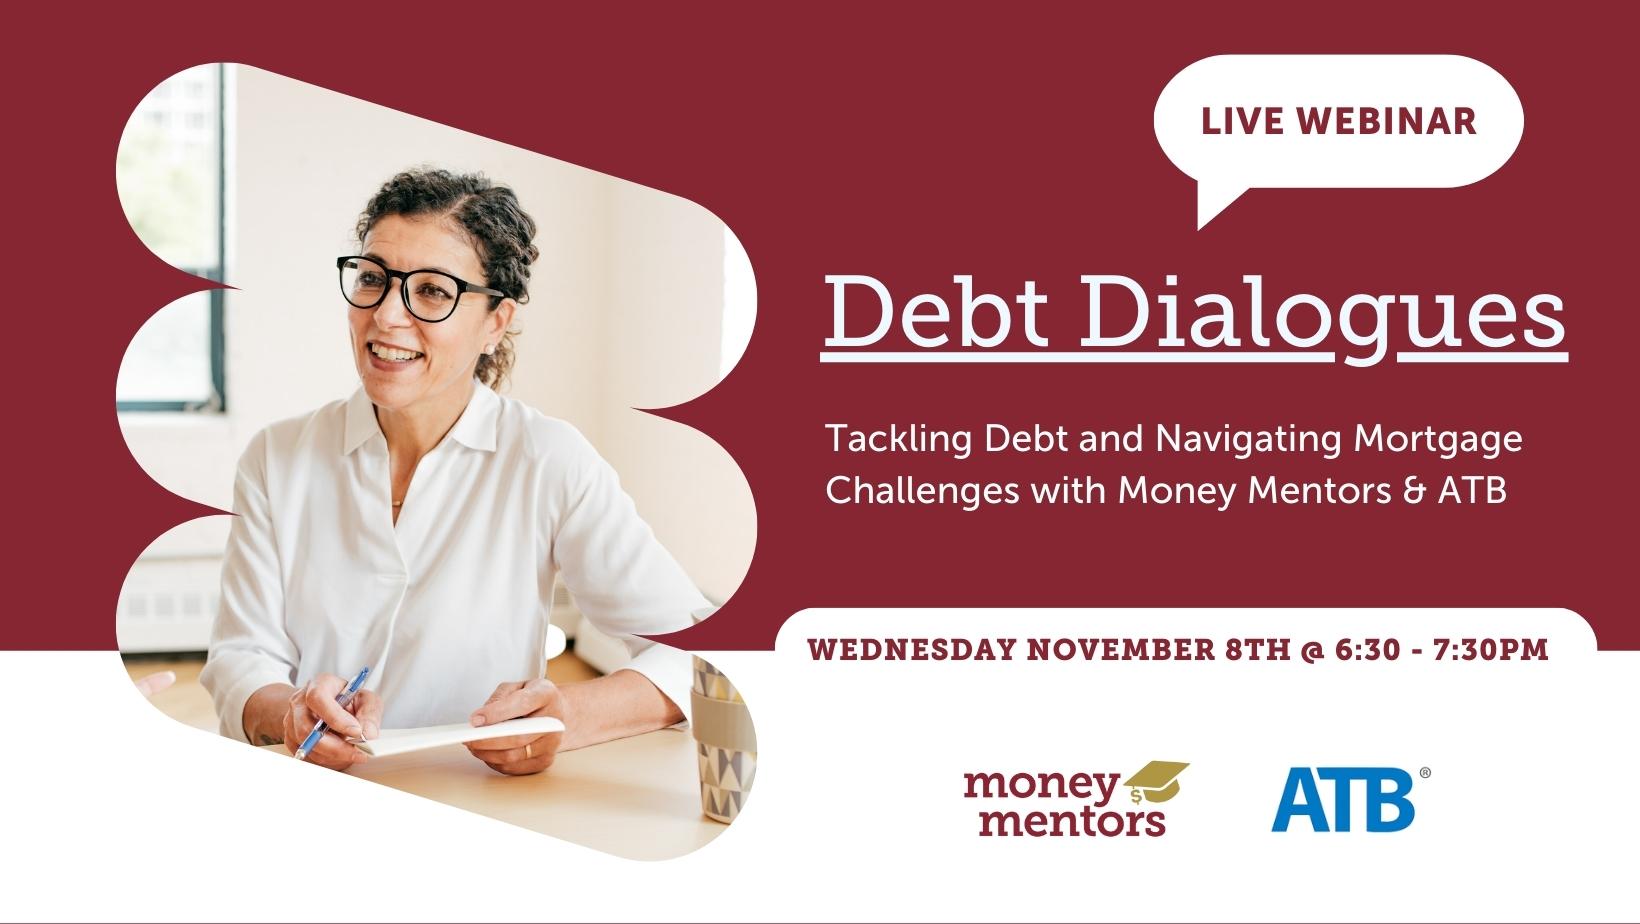 A poster for the Money Mentors live webinar event - Debt Dialogues.